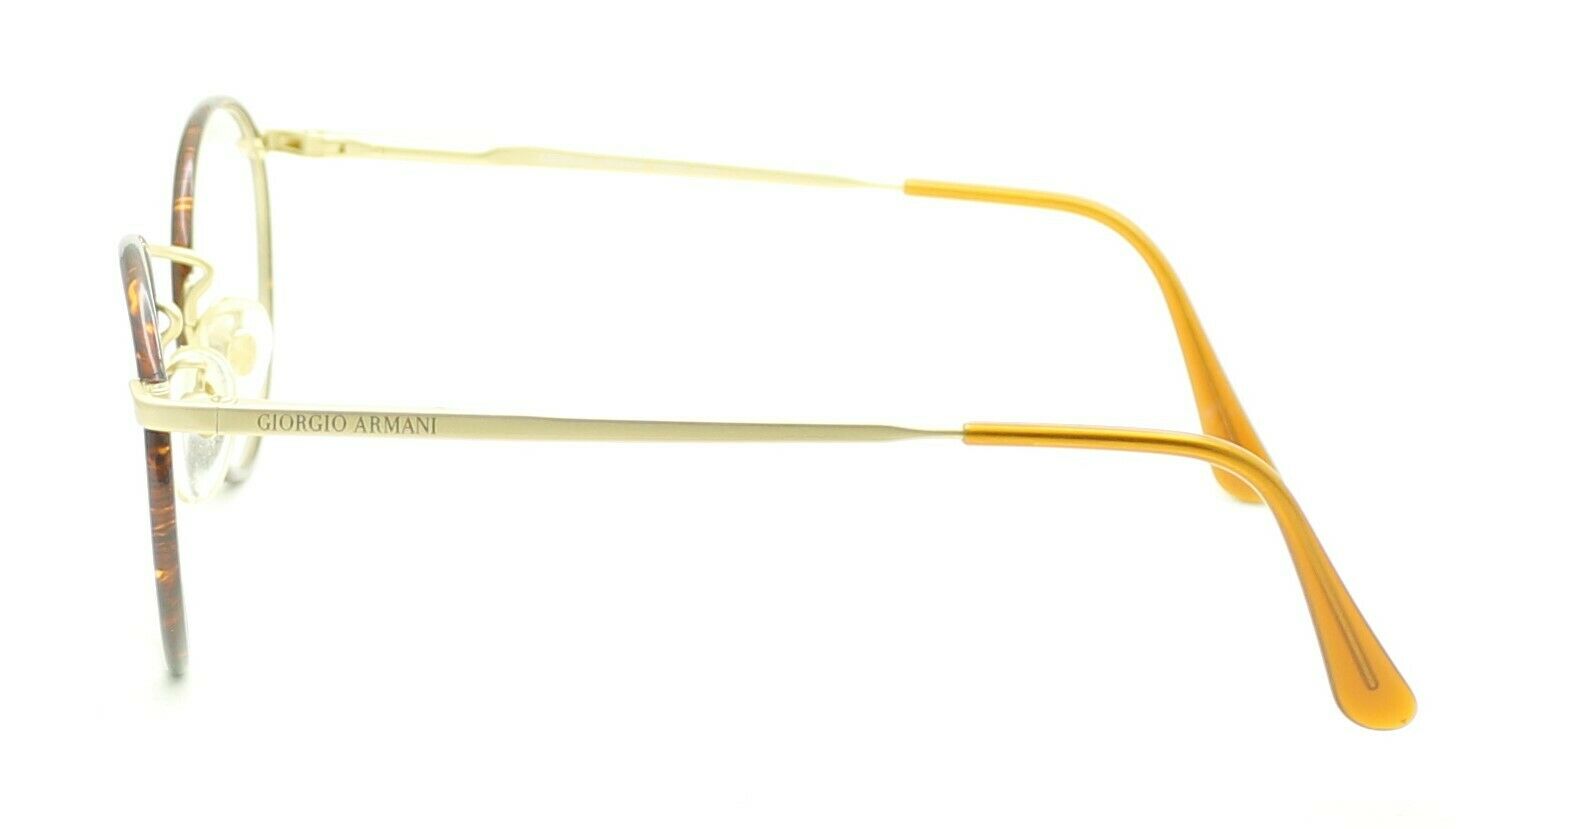 GIORGIO ARMANI GA 145 713 47mm Eyewear FRAMES Eyeglasses RX Optical Glasses New